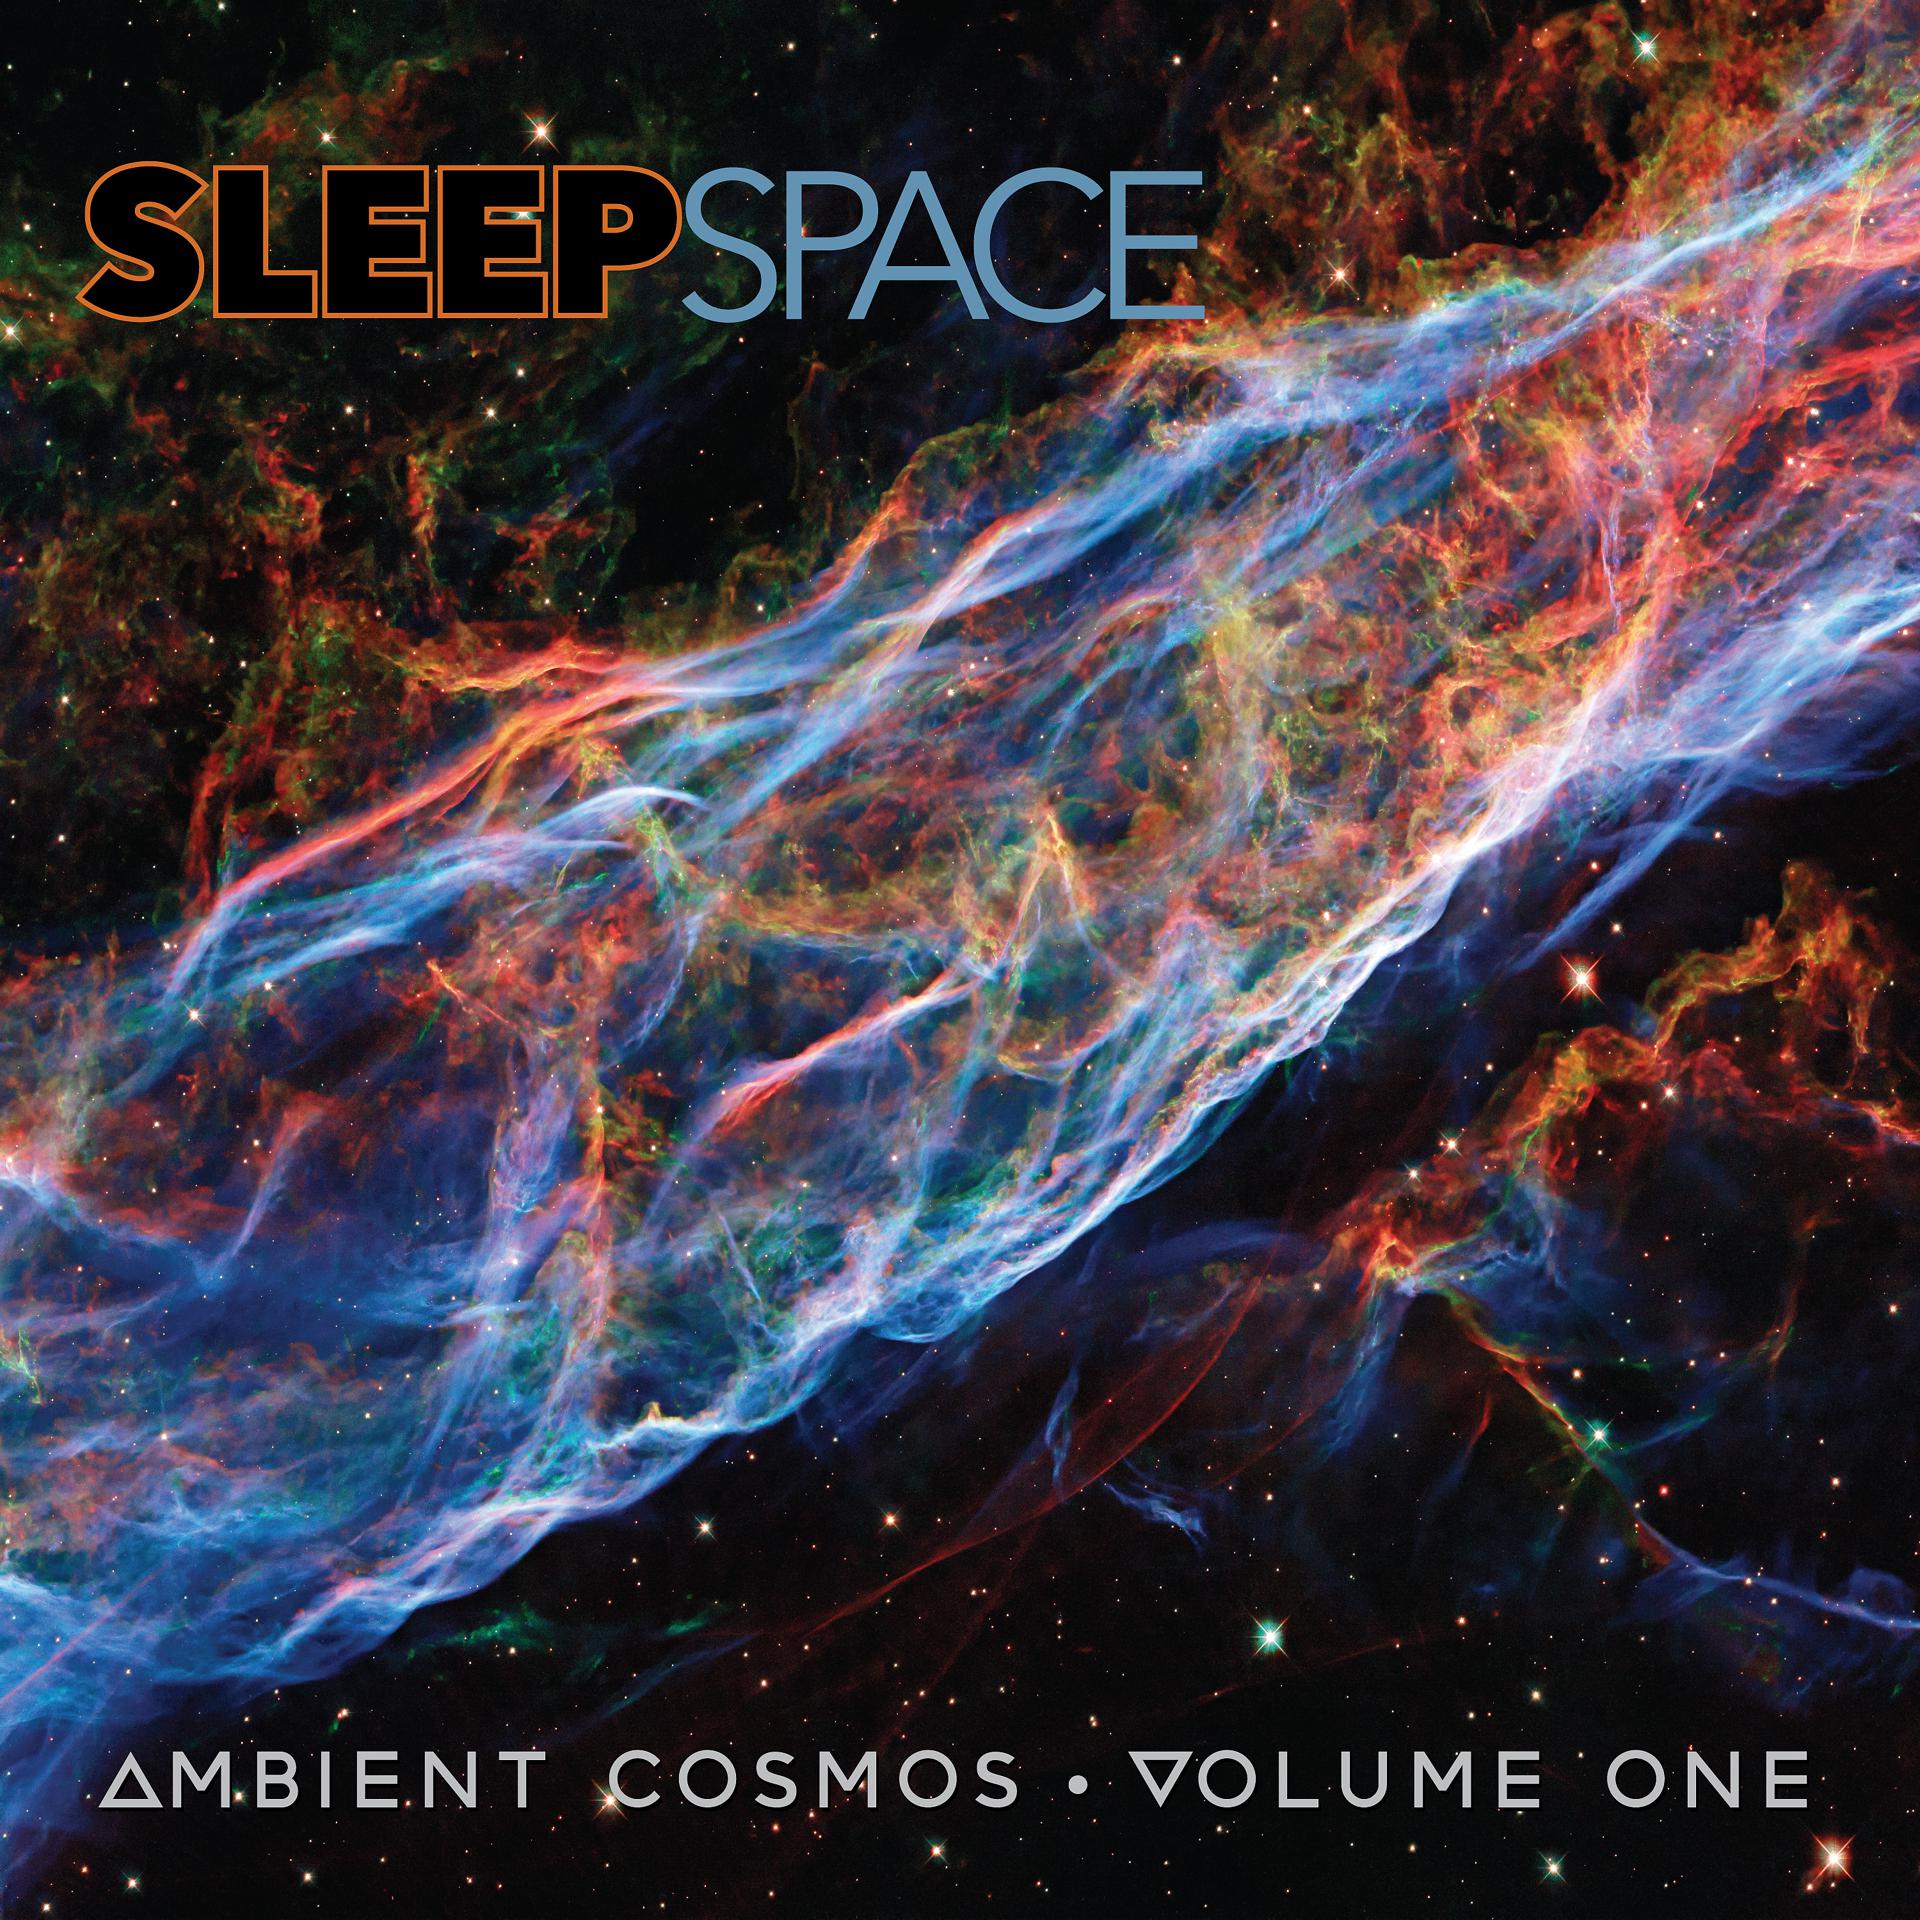 Sleeping island. Cosmic Ambient. Cosmo Volume. Cosmo Volume i am.